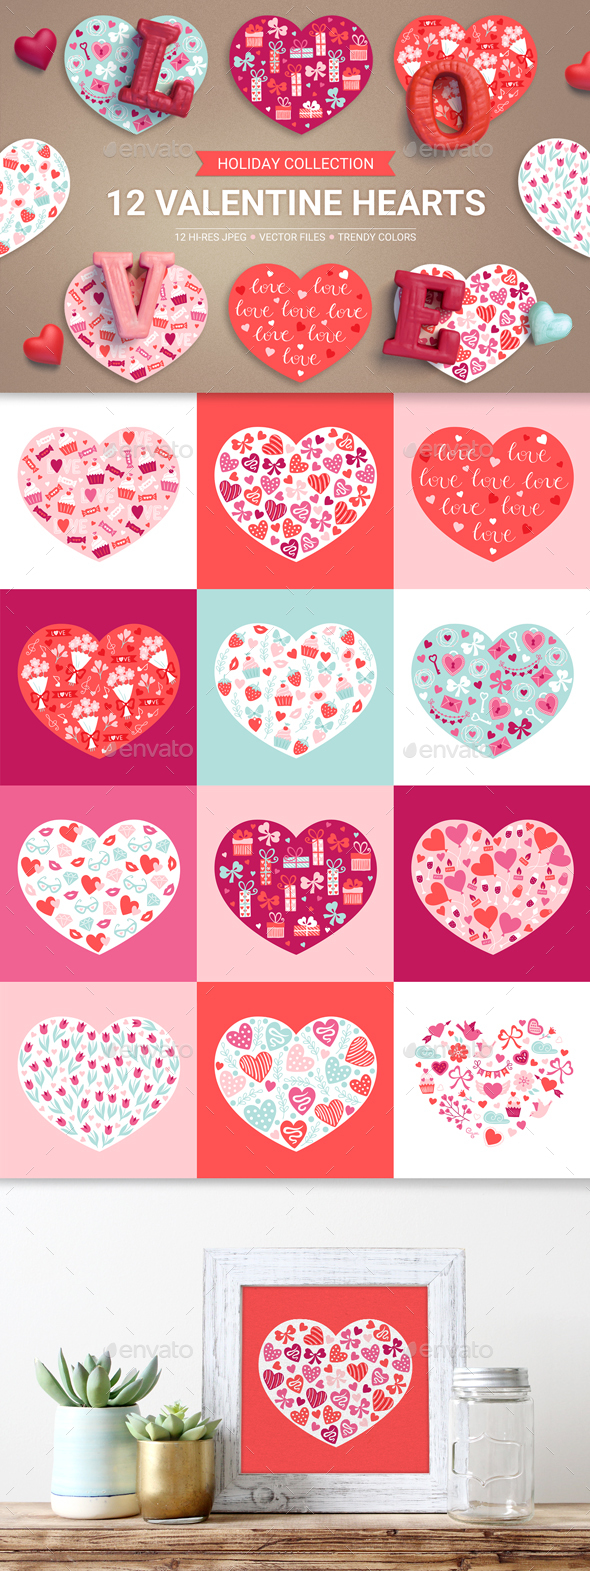 12 Valentine Hearts